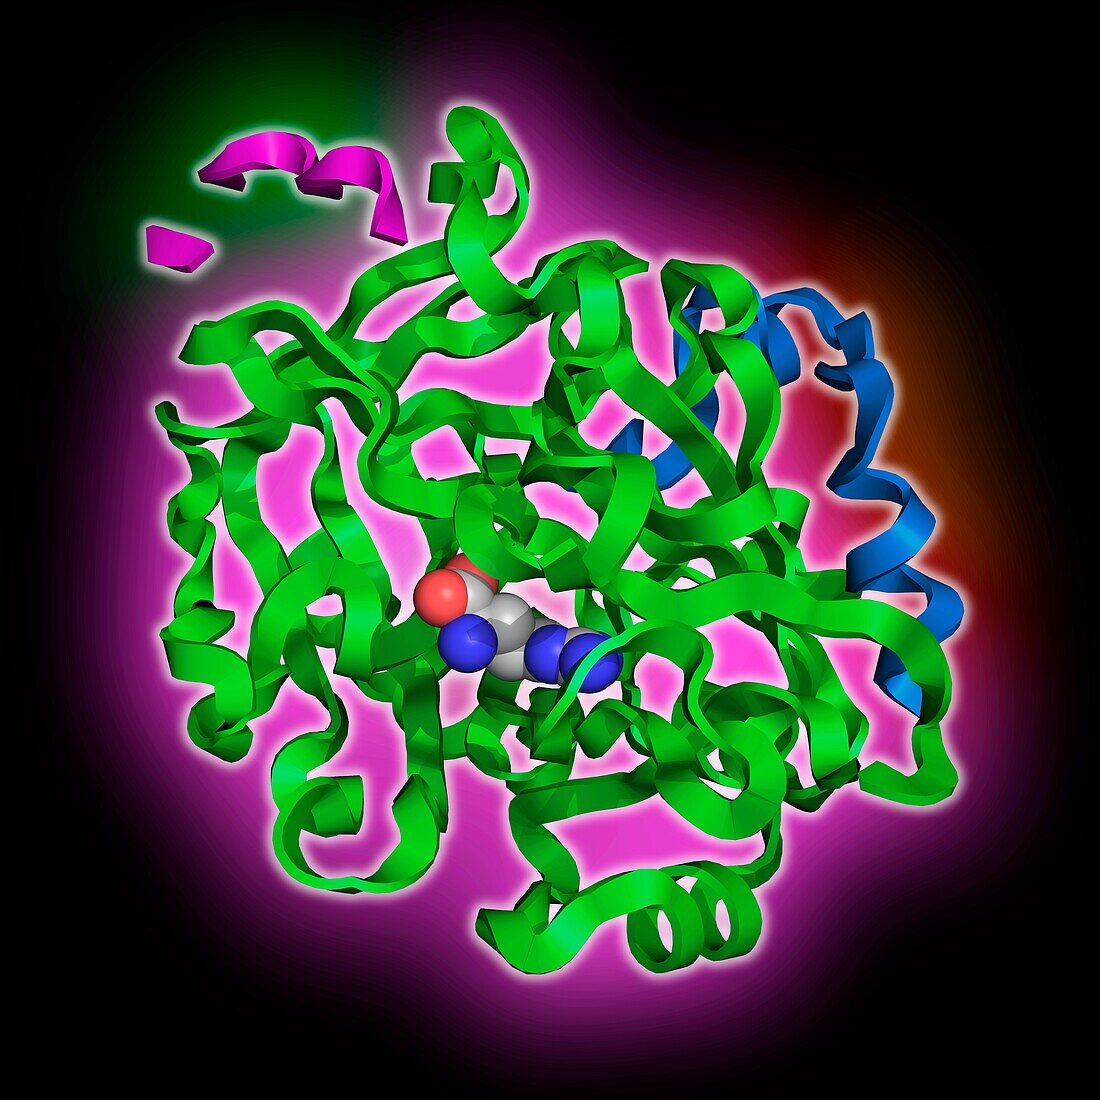 Thrombin in complex with D-arginine, molecular model